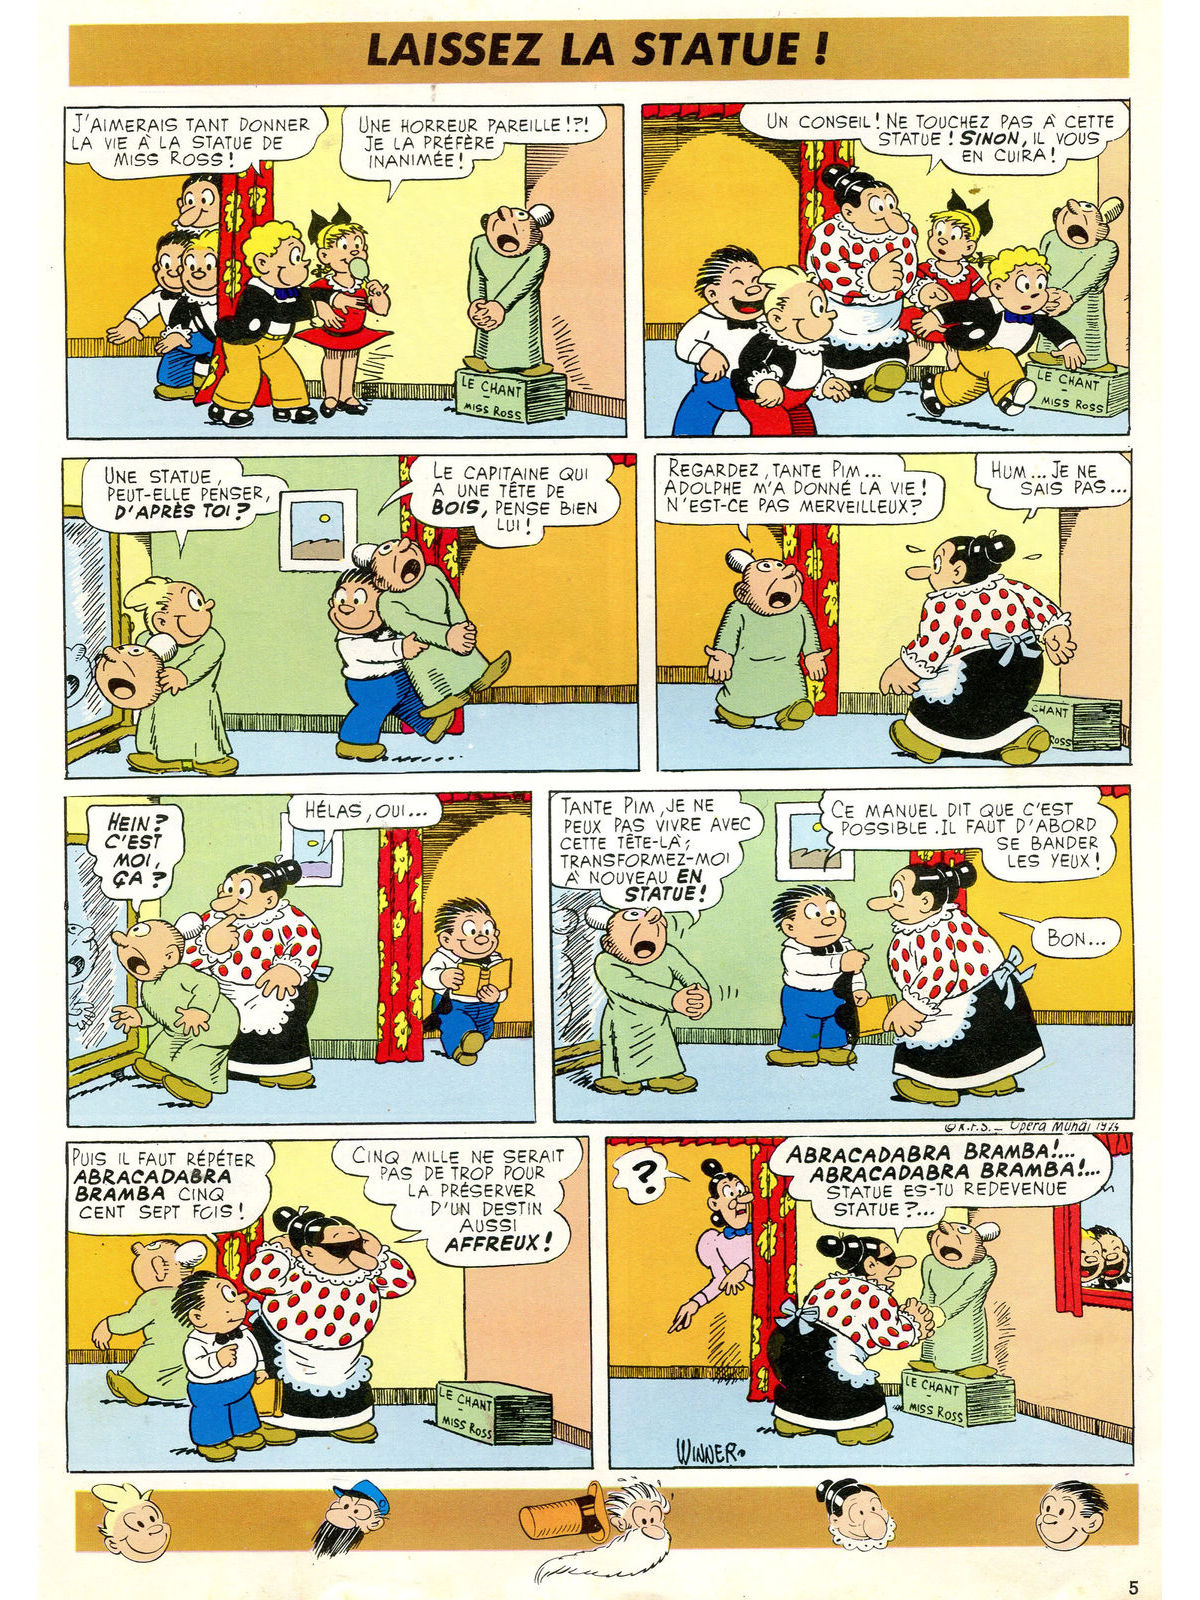 pim pam poum (comic book)